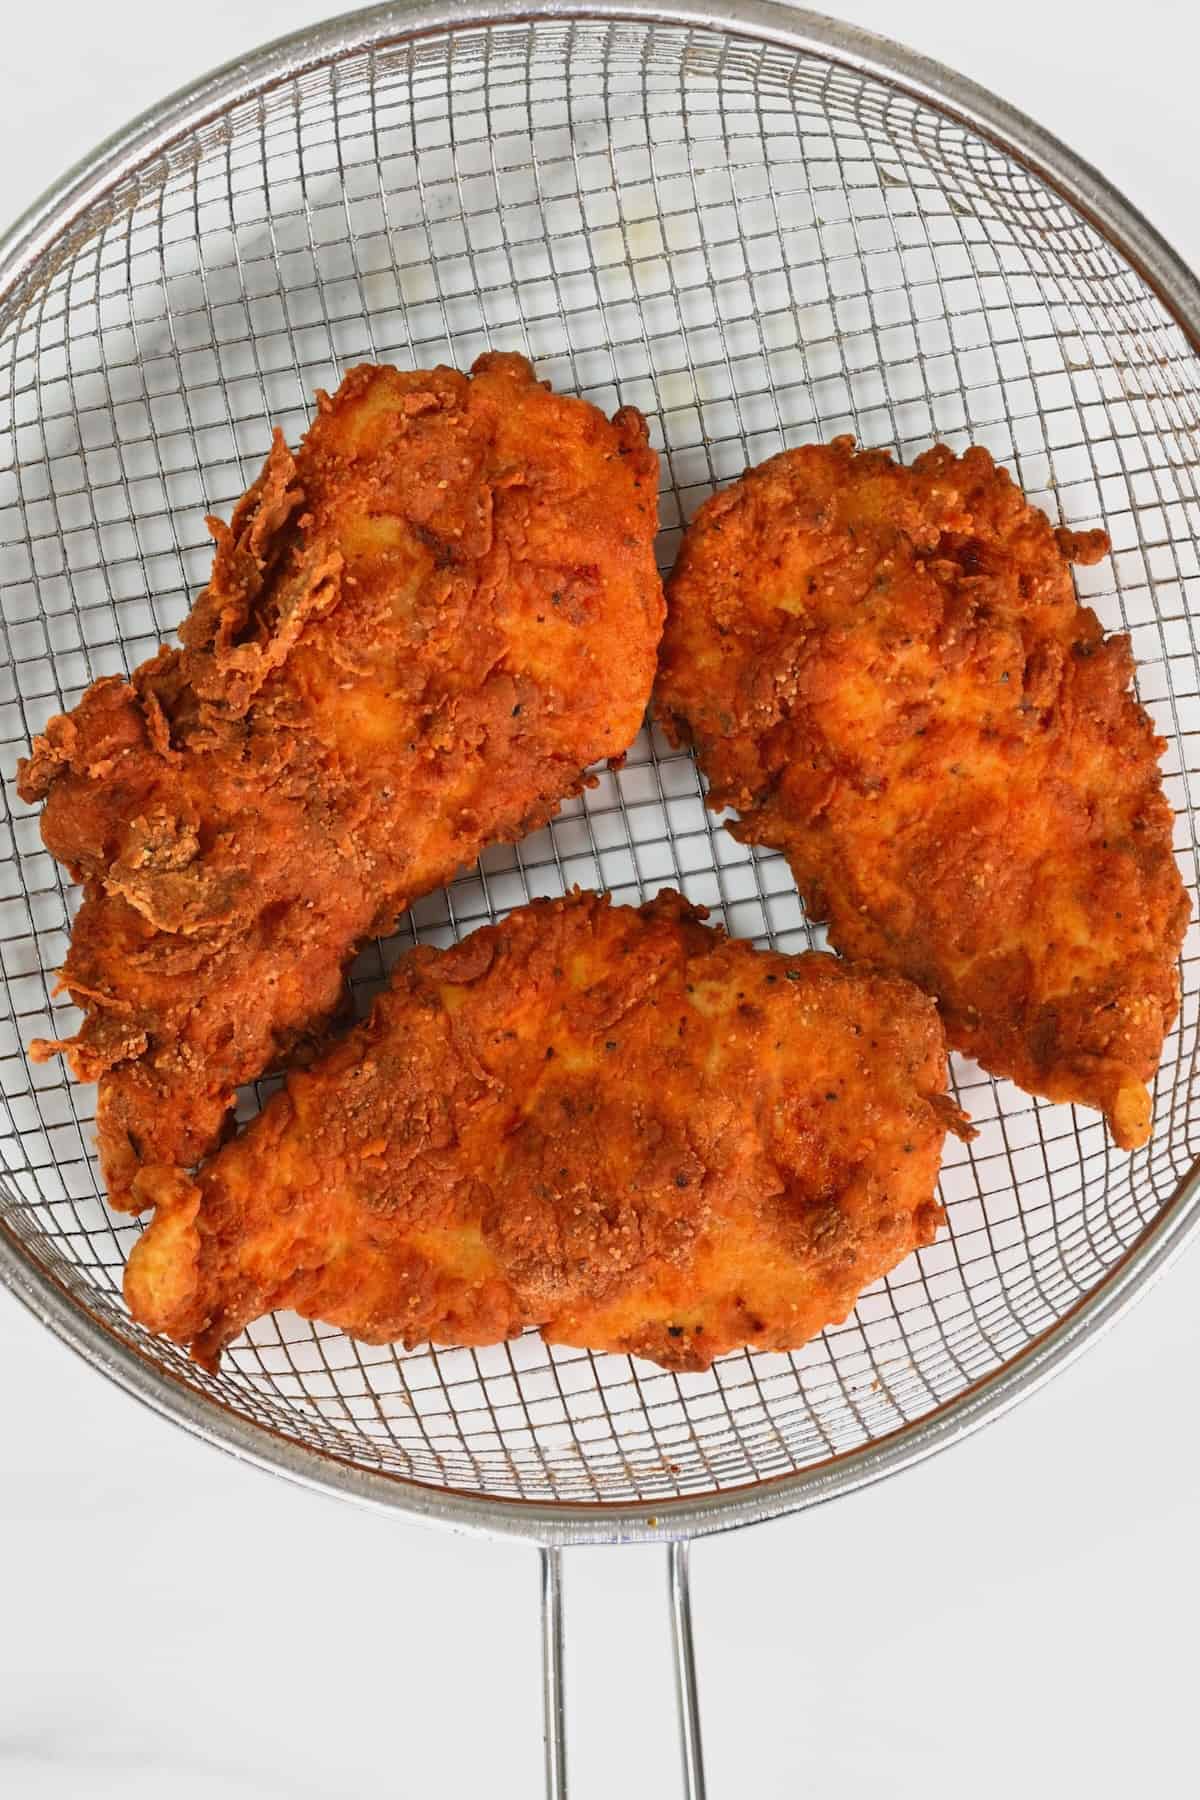 Freshly made fried chicken